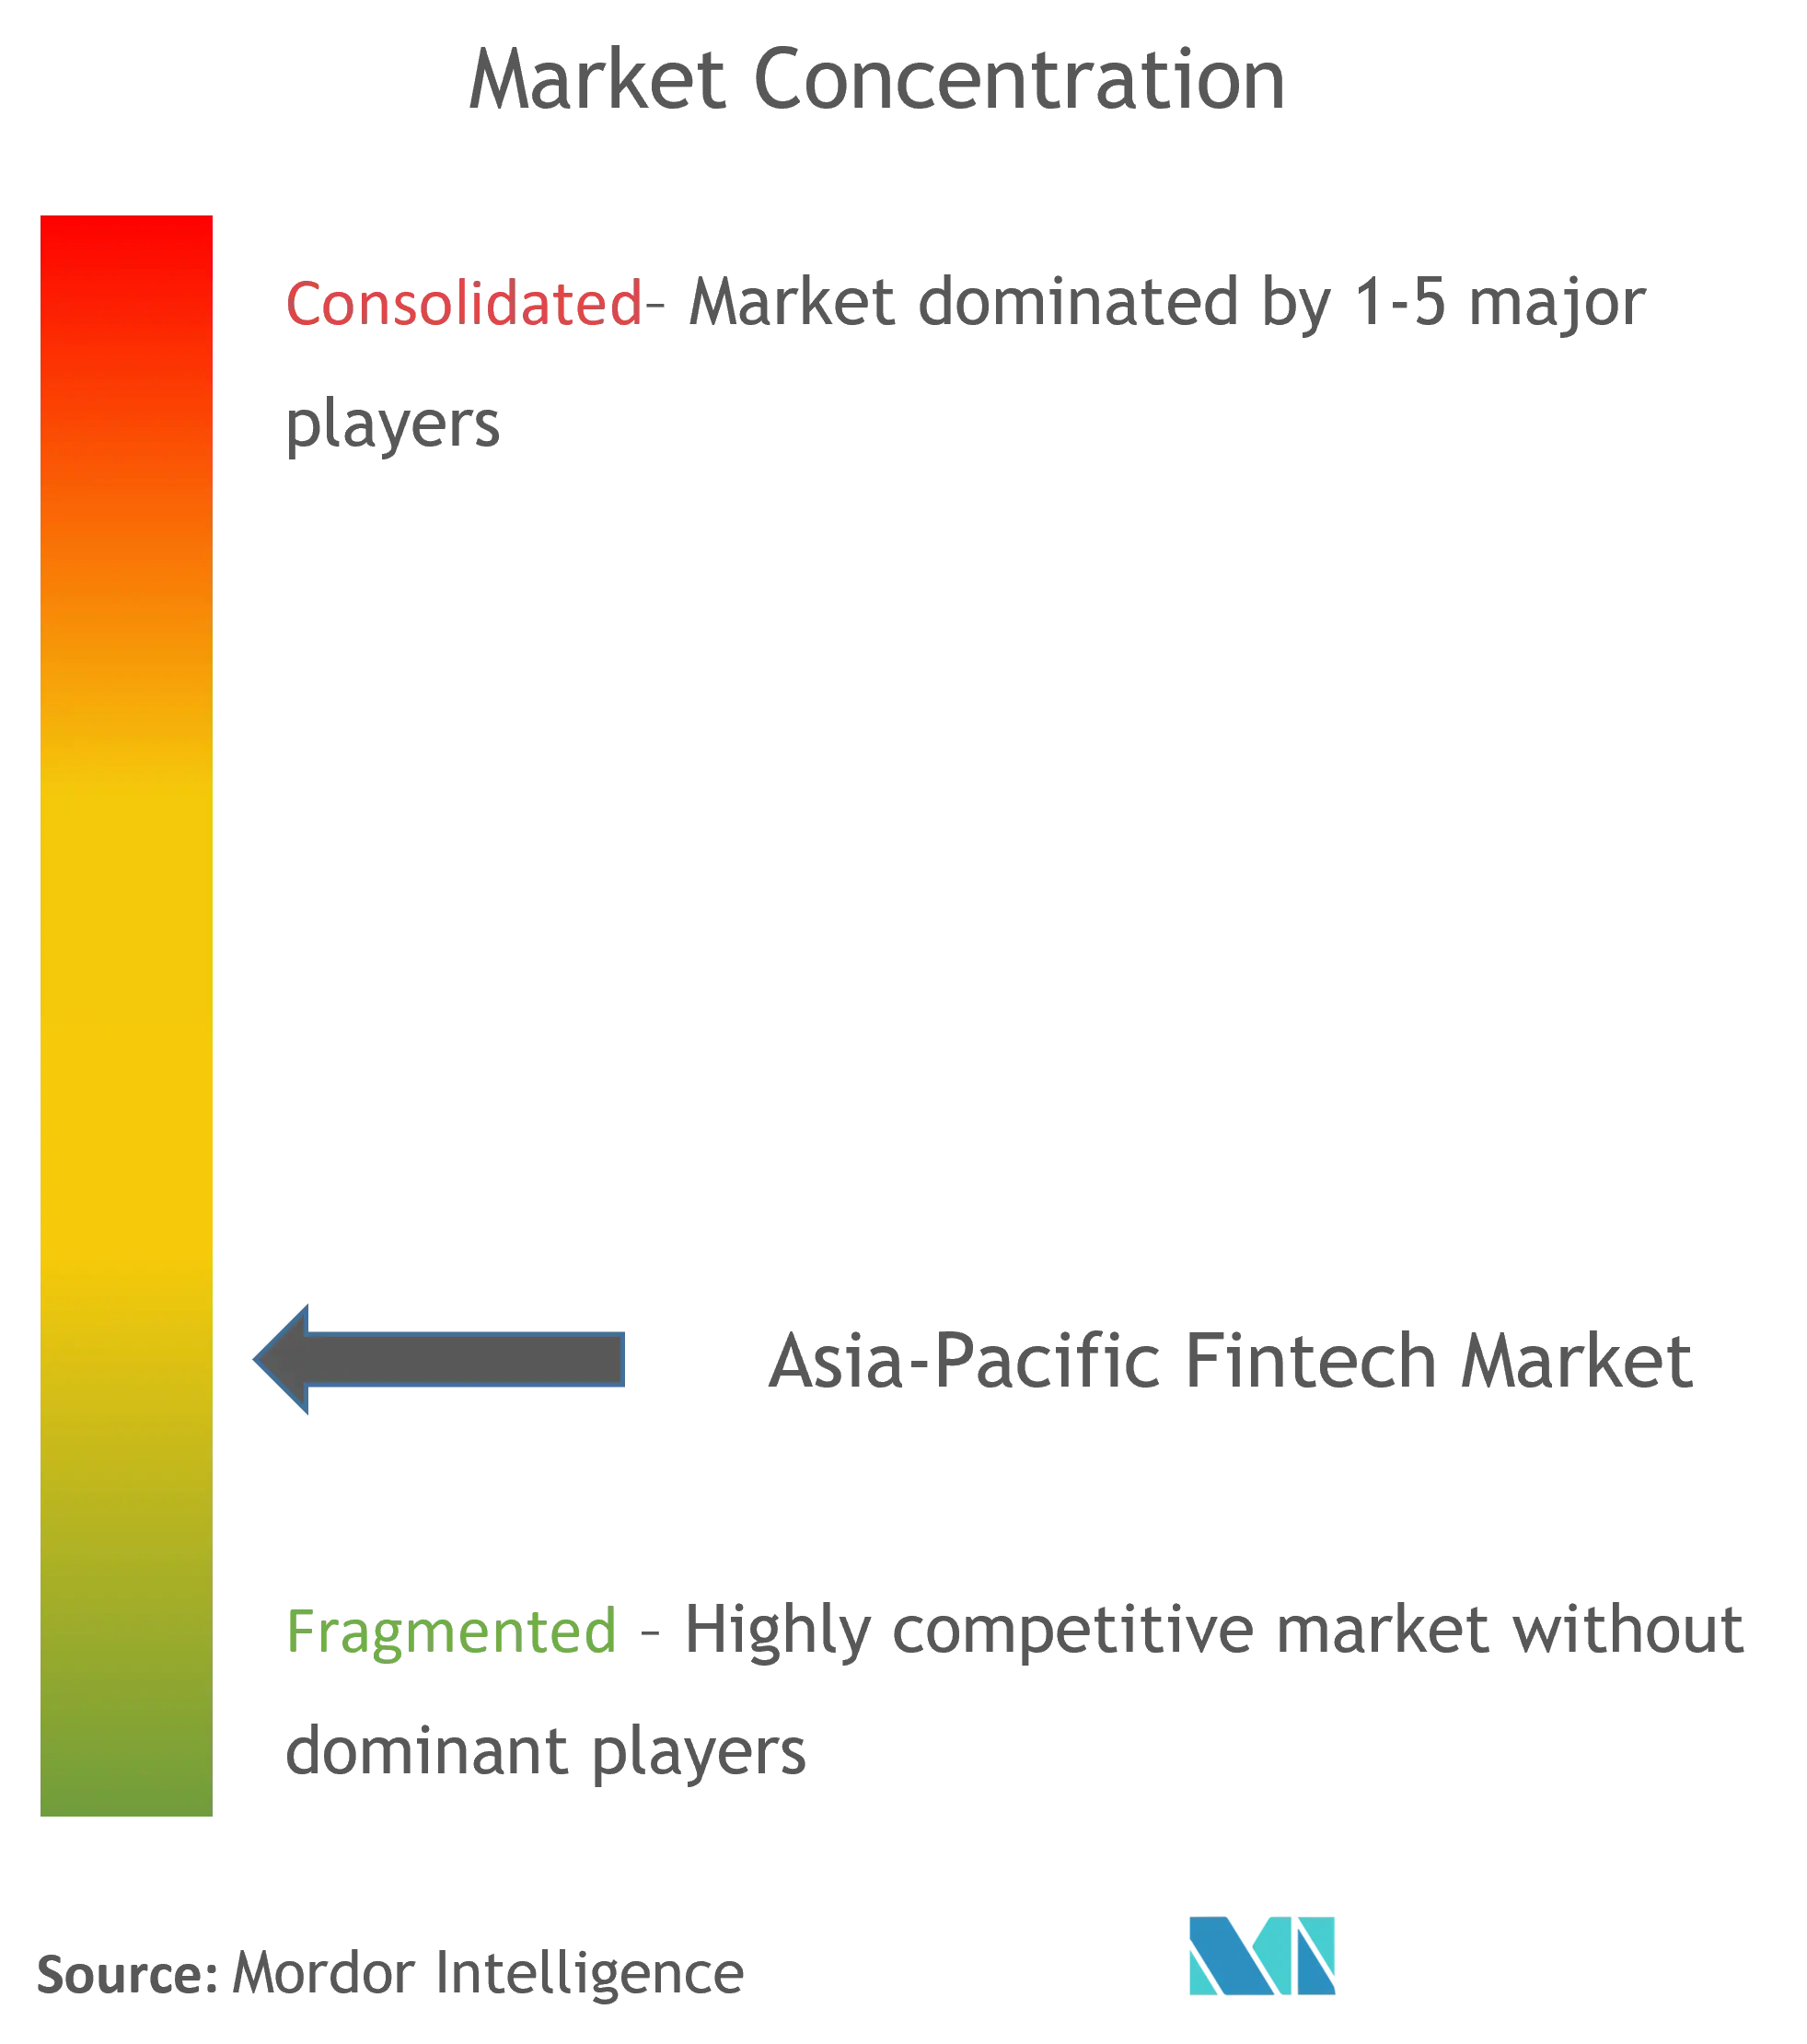 Asia-Pacific Fintech Market Concentration